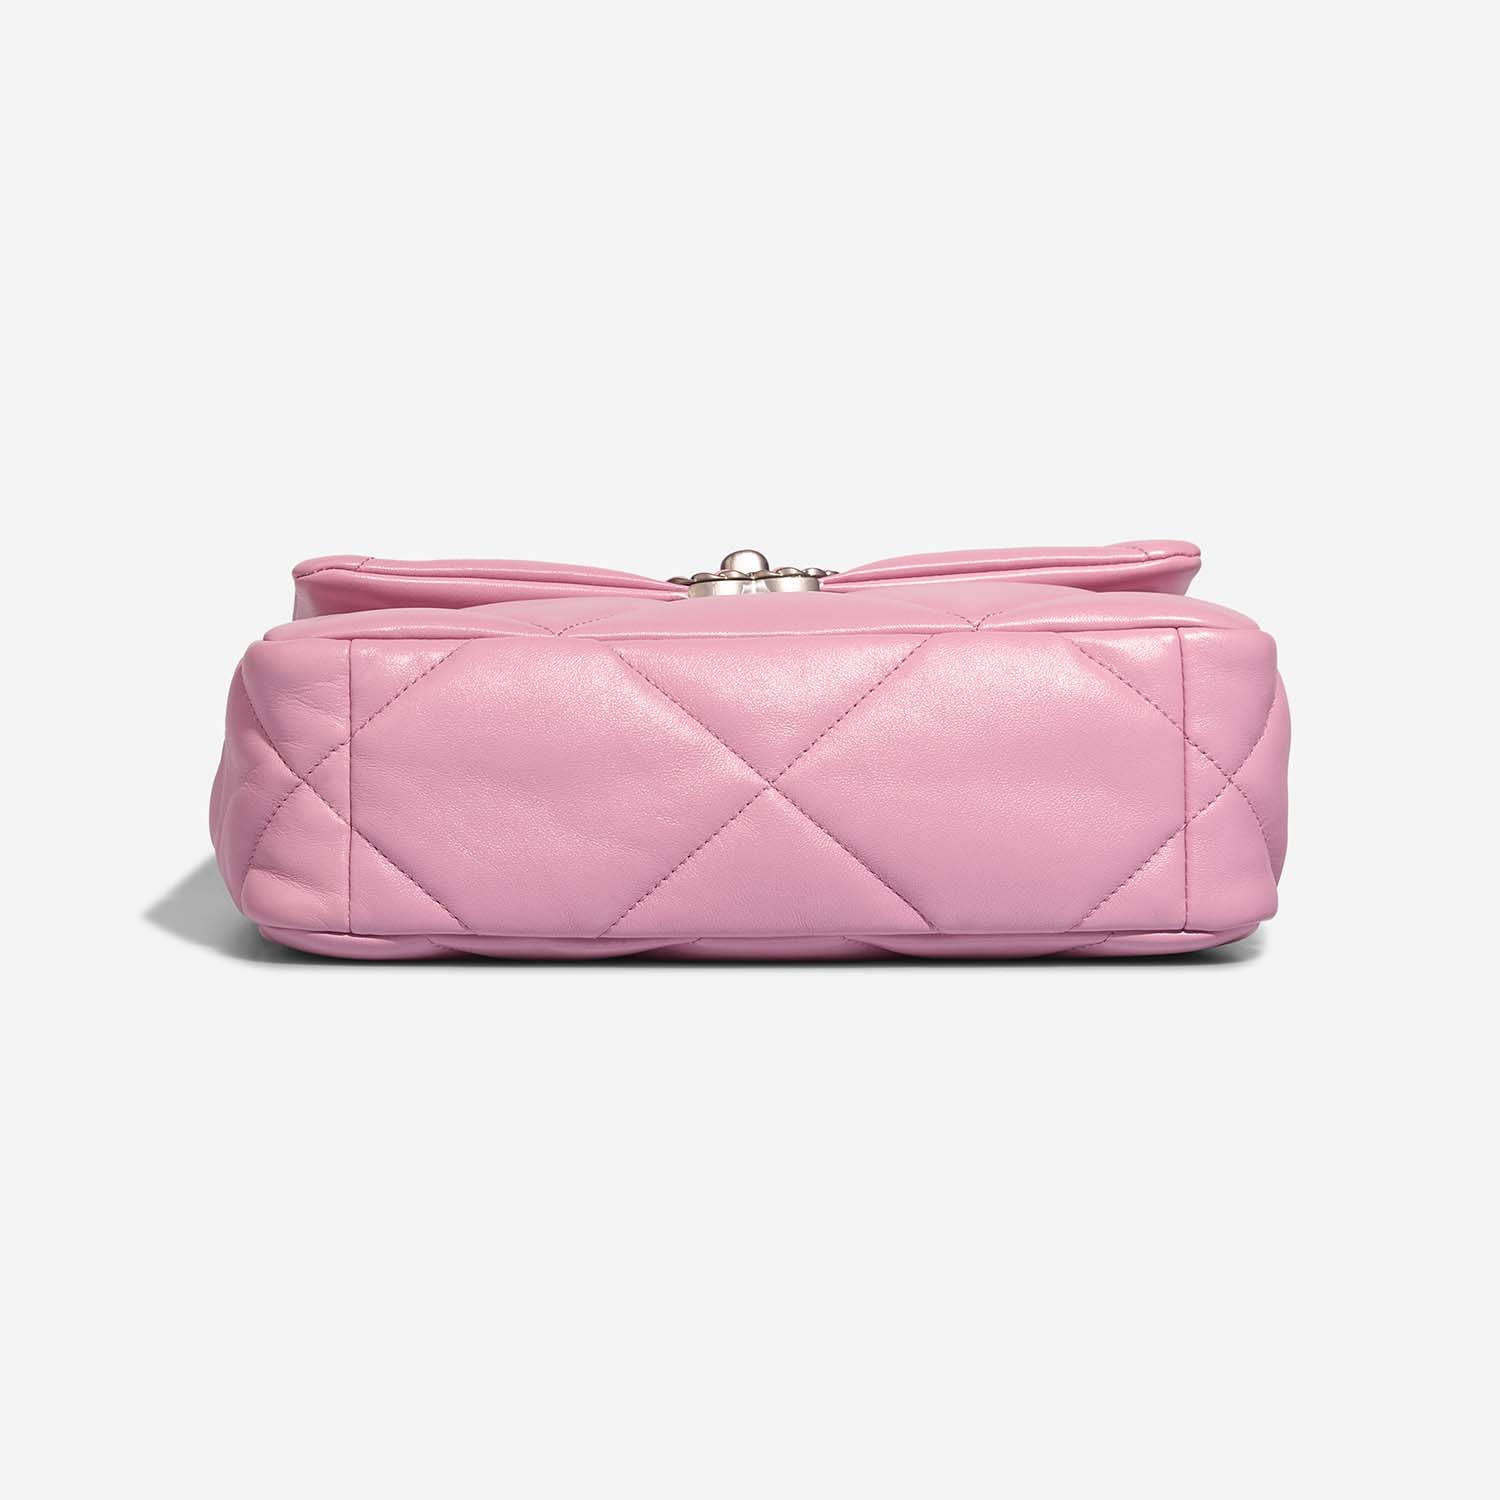 Chanel 19 Flapbag Pink Bottom | Sell your designer bag on Saclab.com